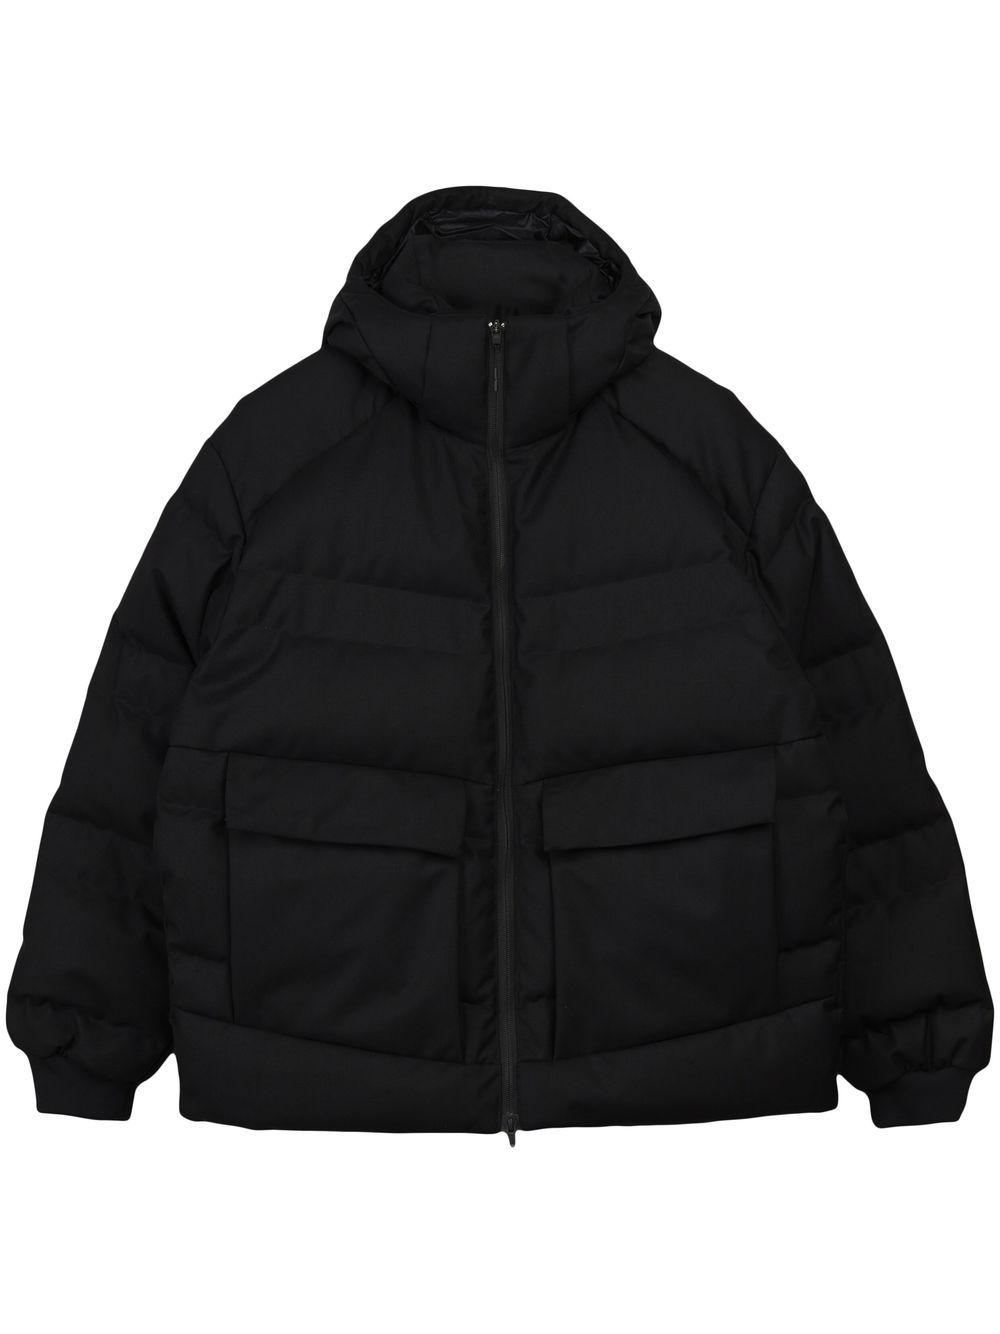 Y-3 Hooded Puffer Jacket in Black for Men | Lyst